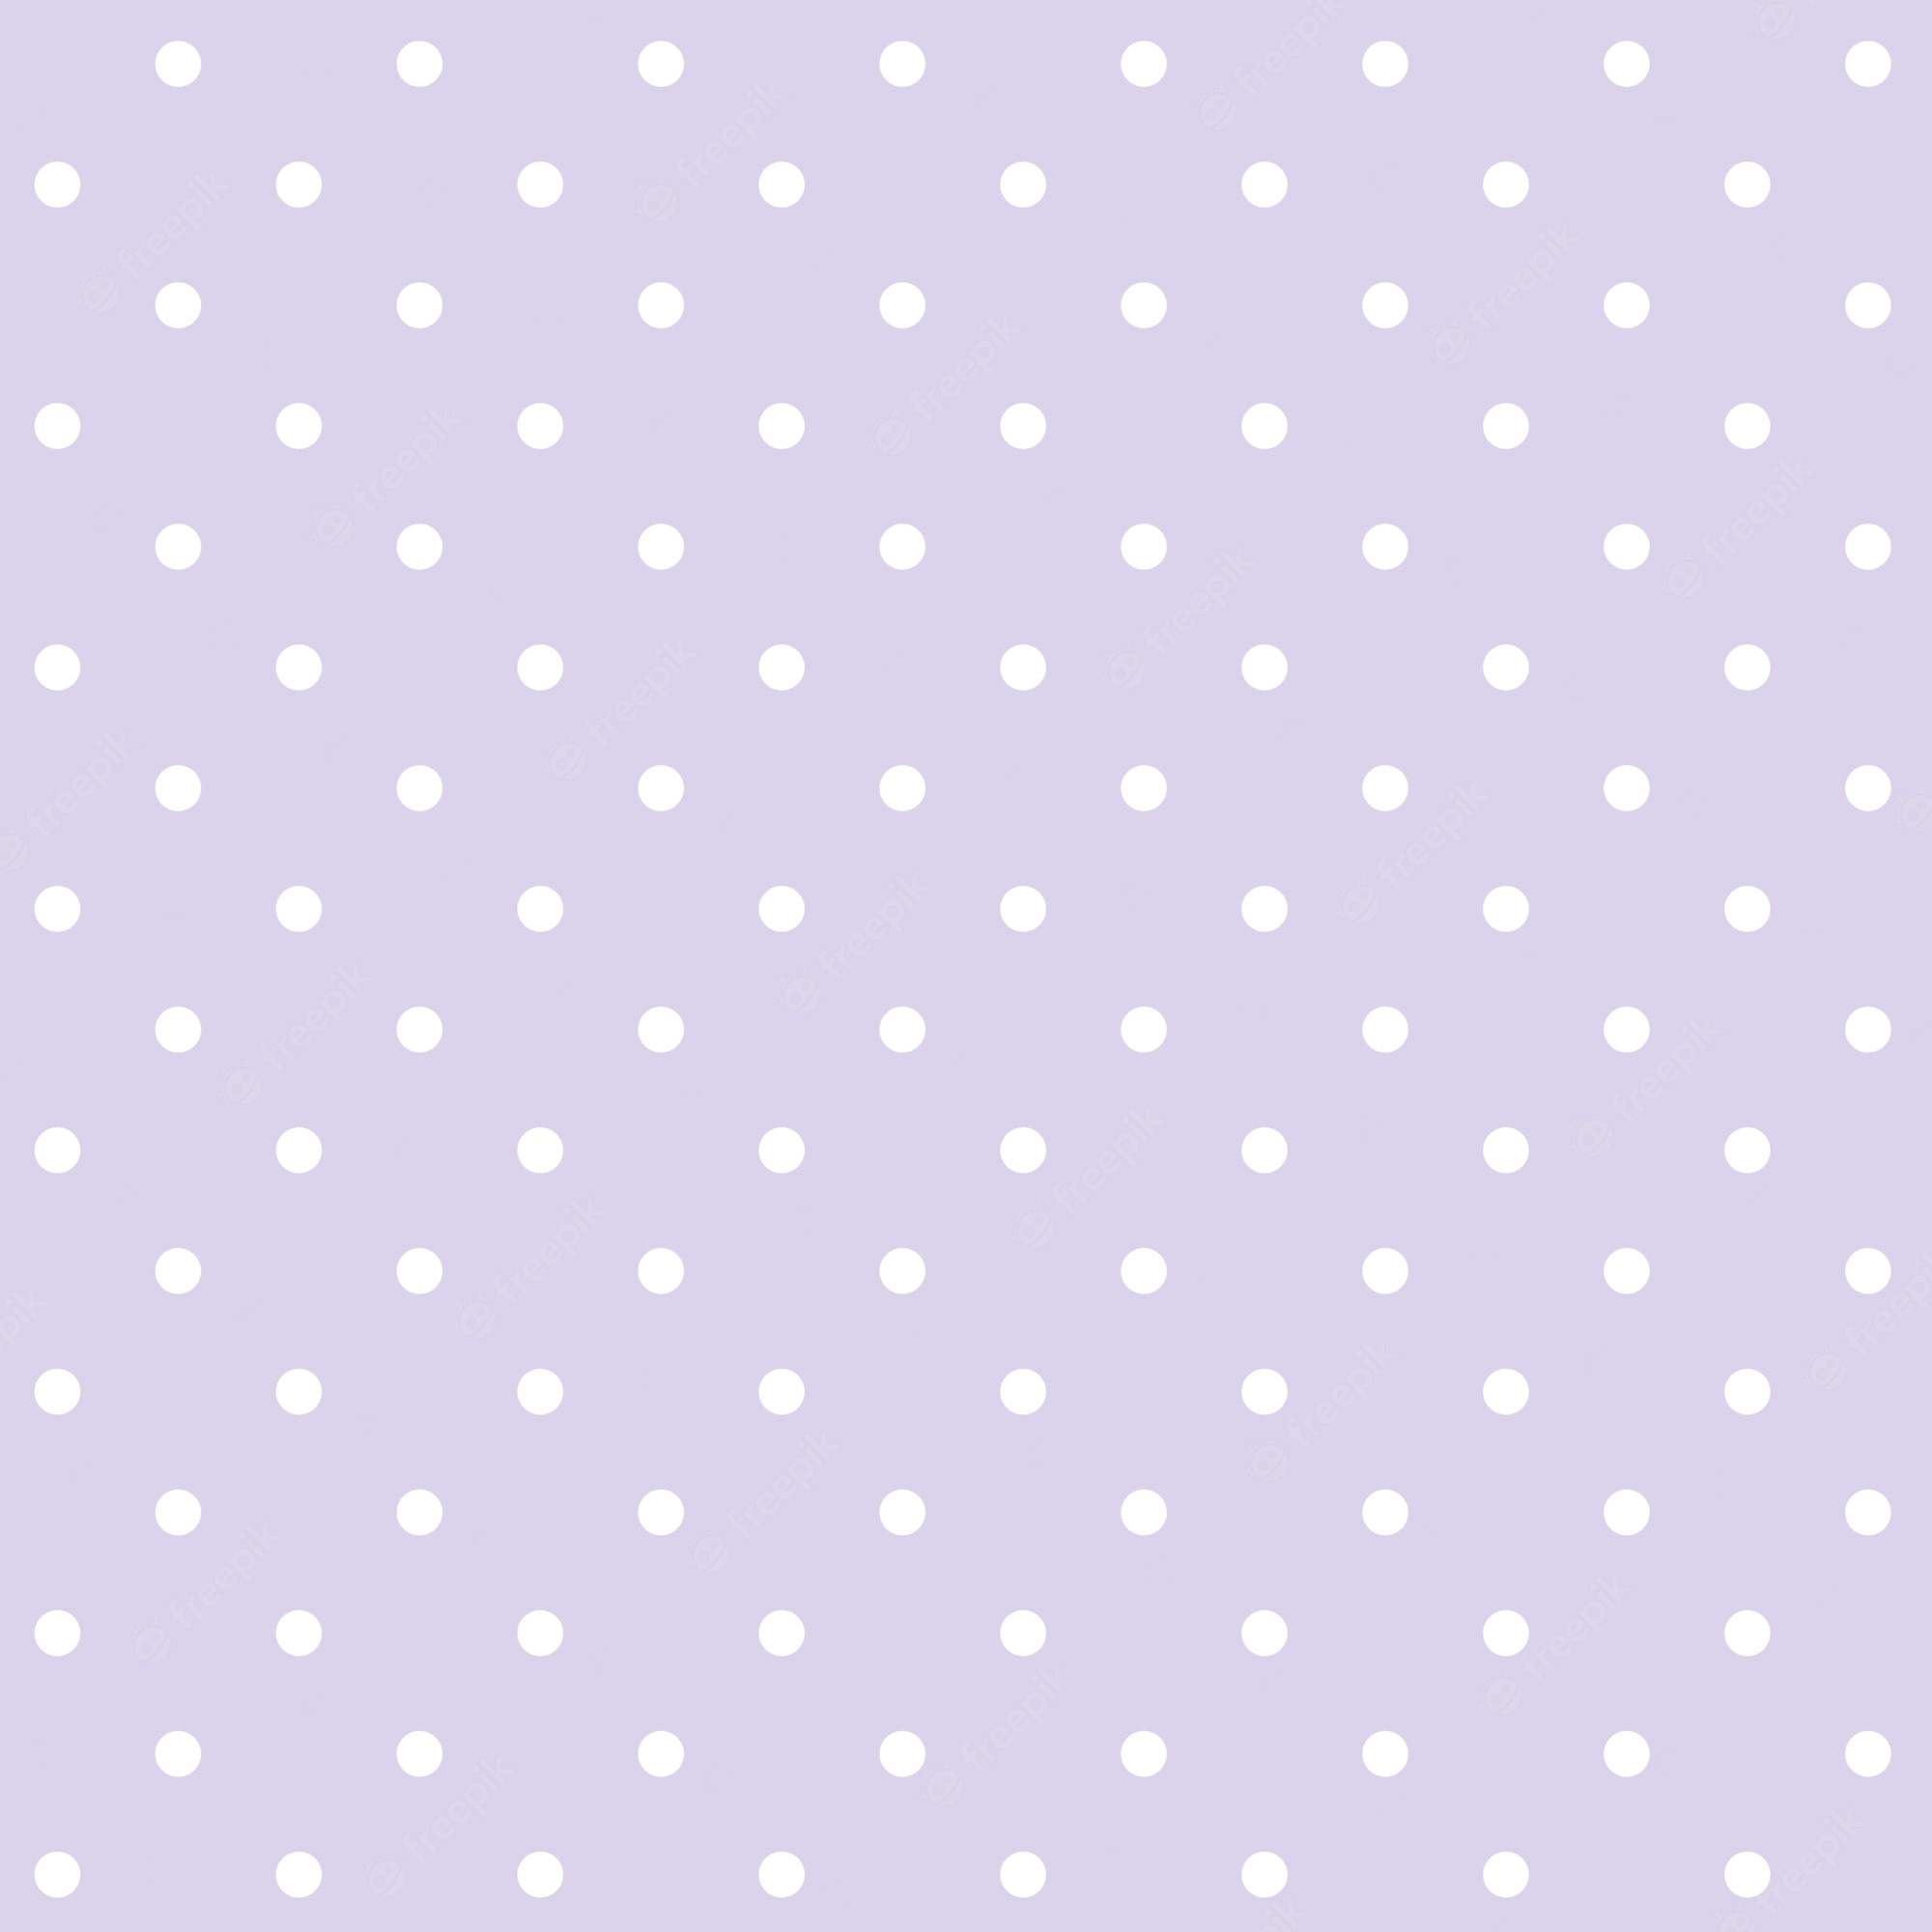 Purple Polka Dots Backgrounds